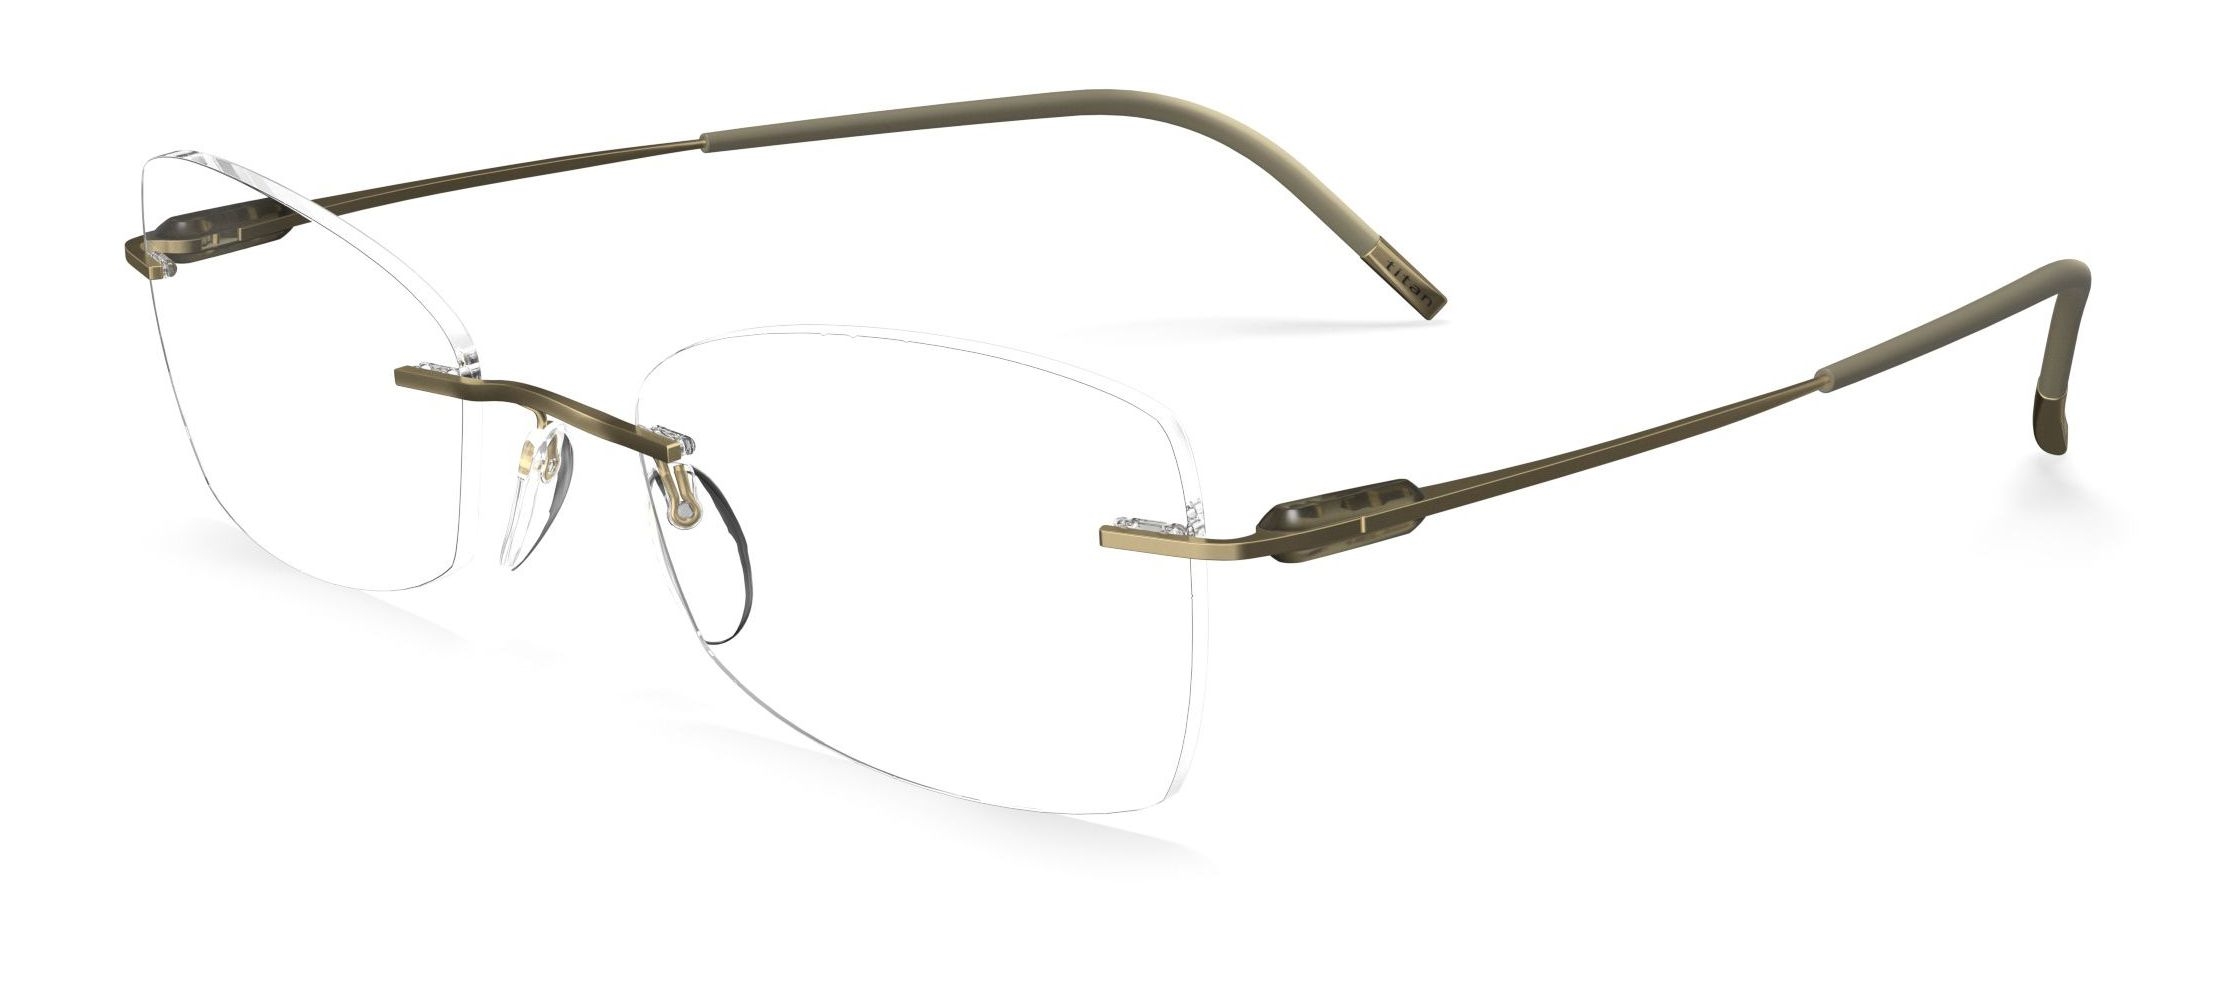 Silhouette 5561 Purist Rimless Glasses